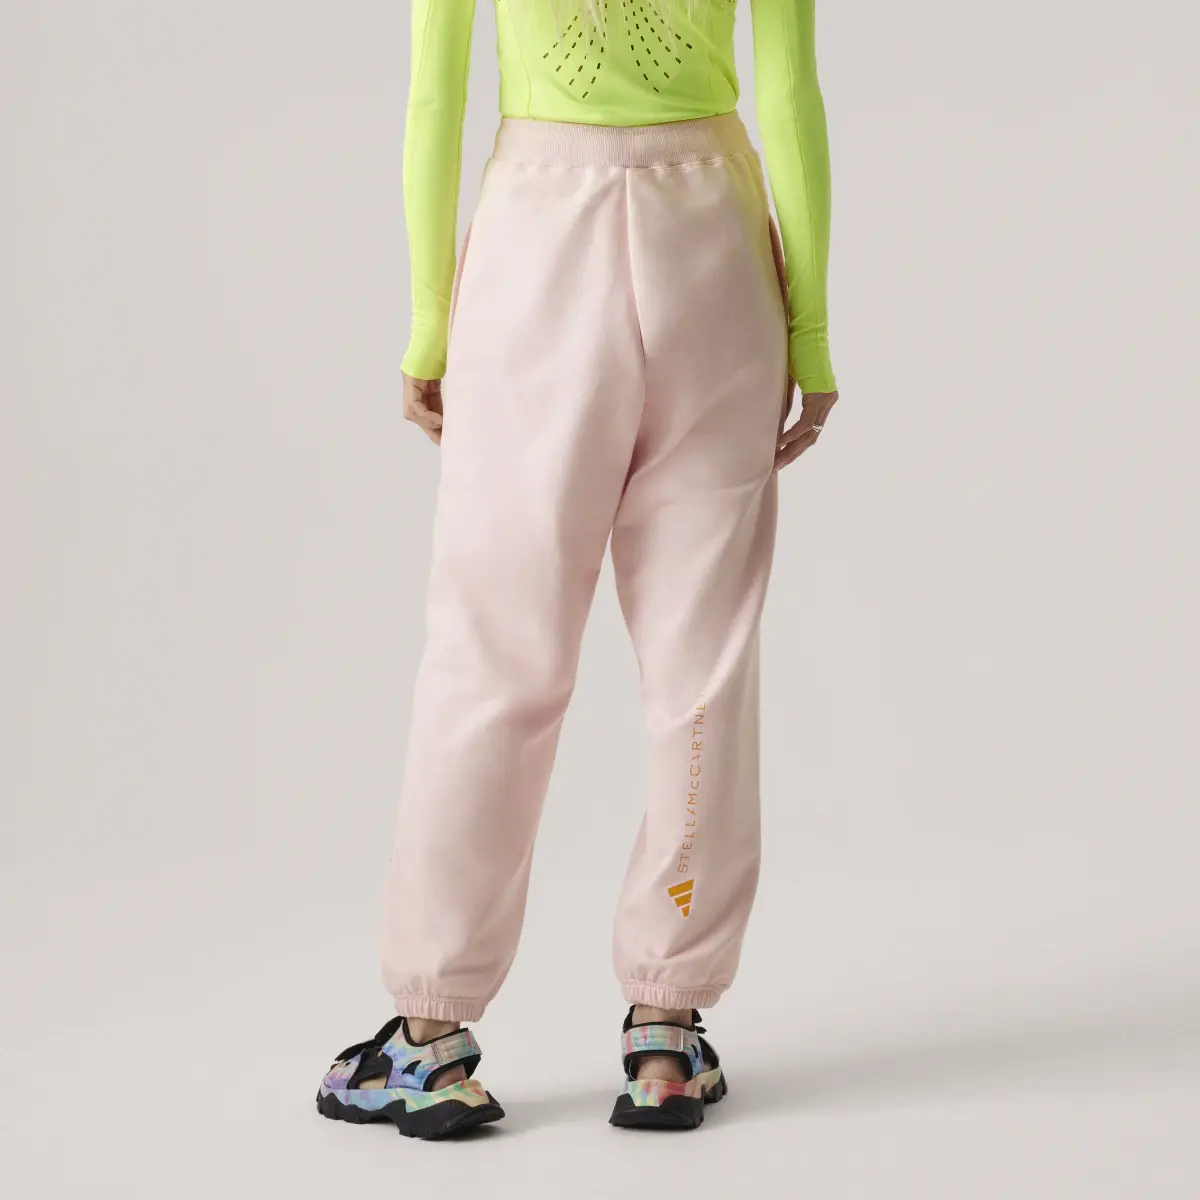 Adidas by Stella McCartney Sportswear Sweatpants (Gender Neutral). 3